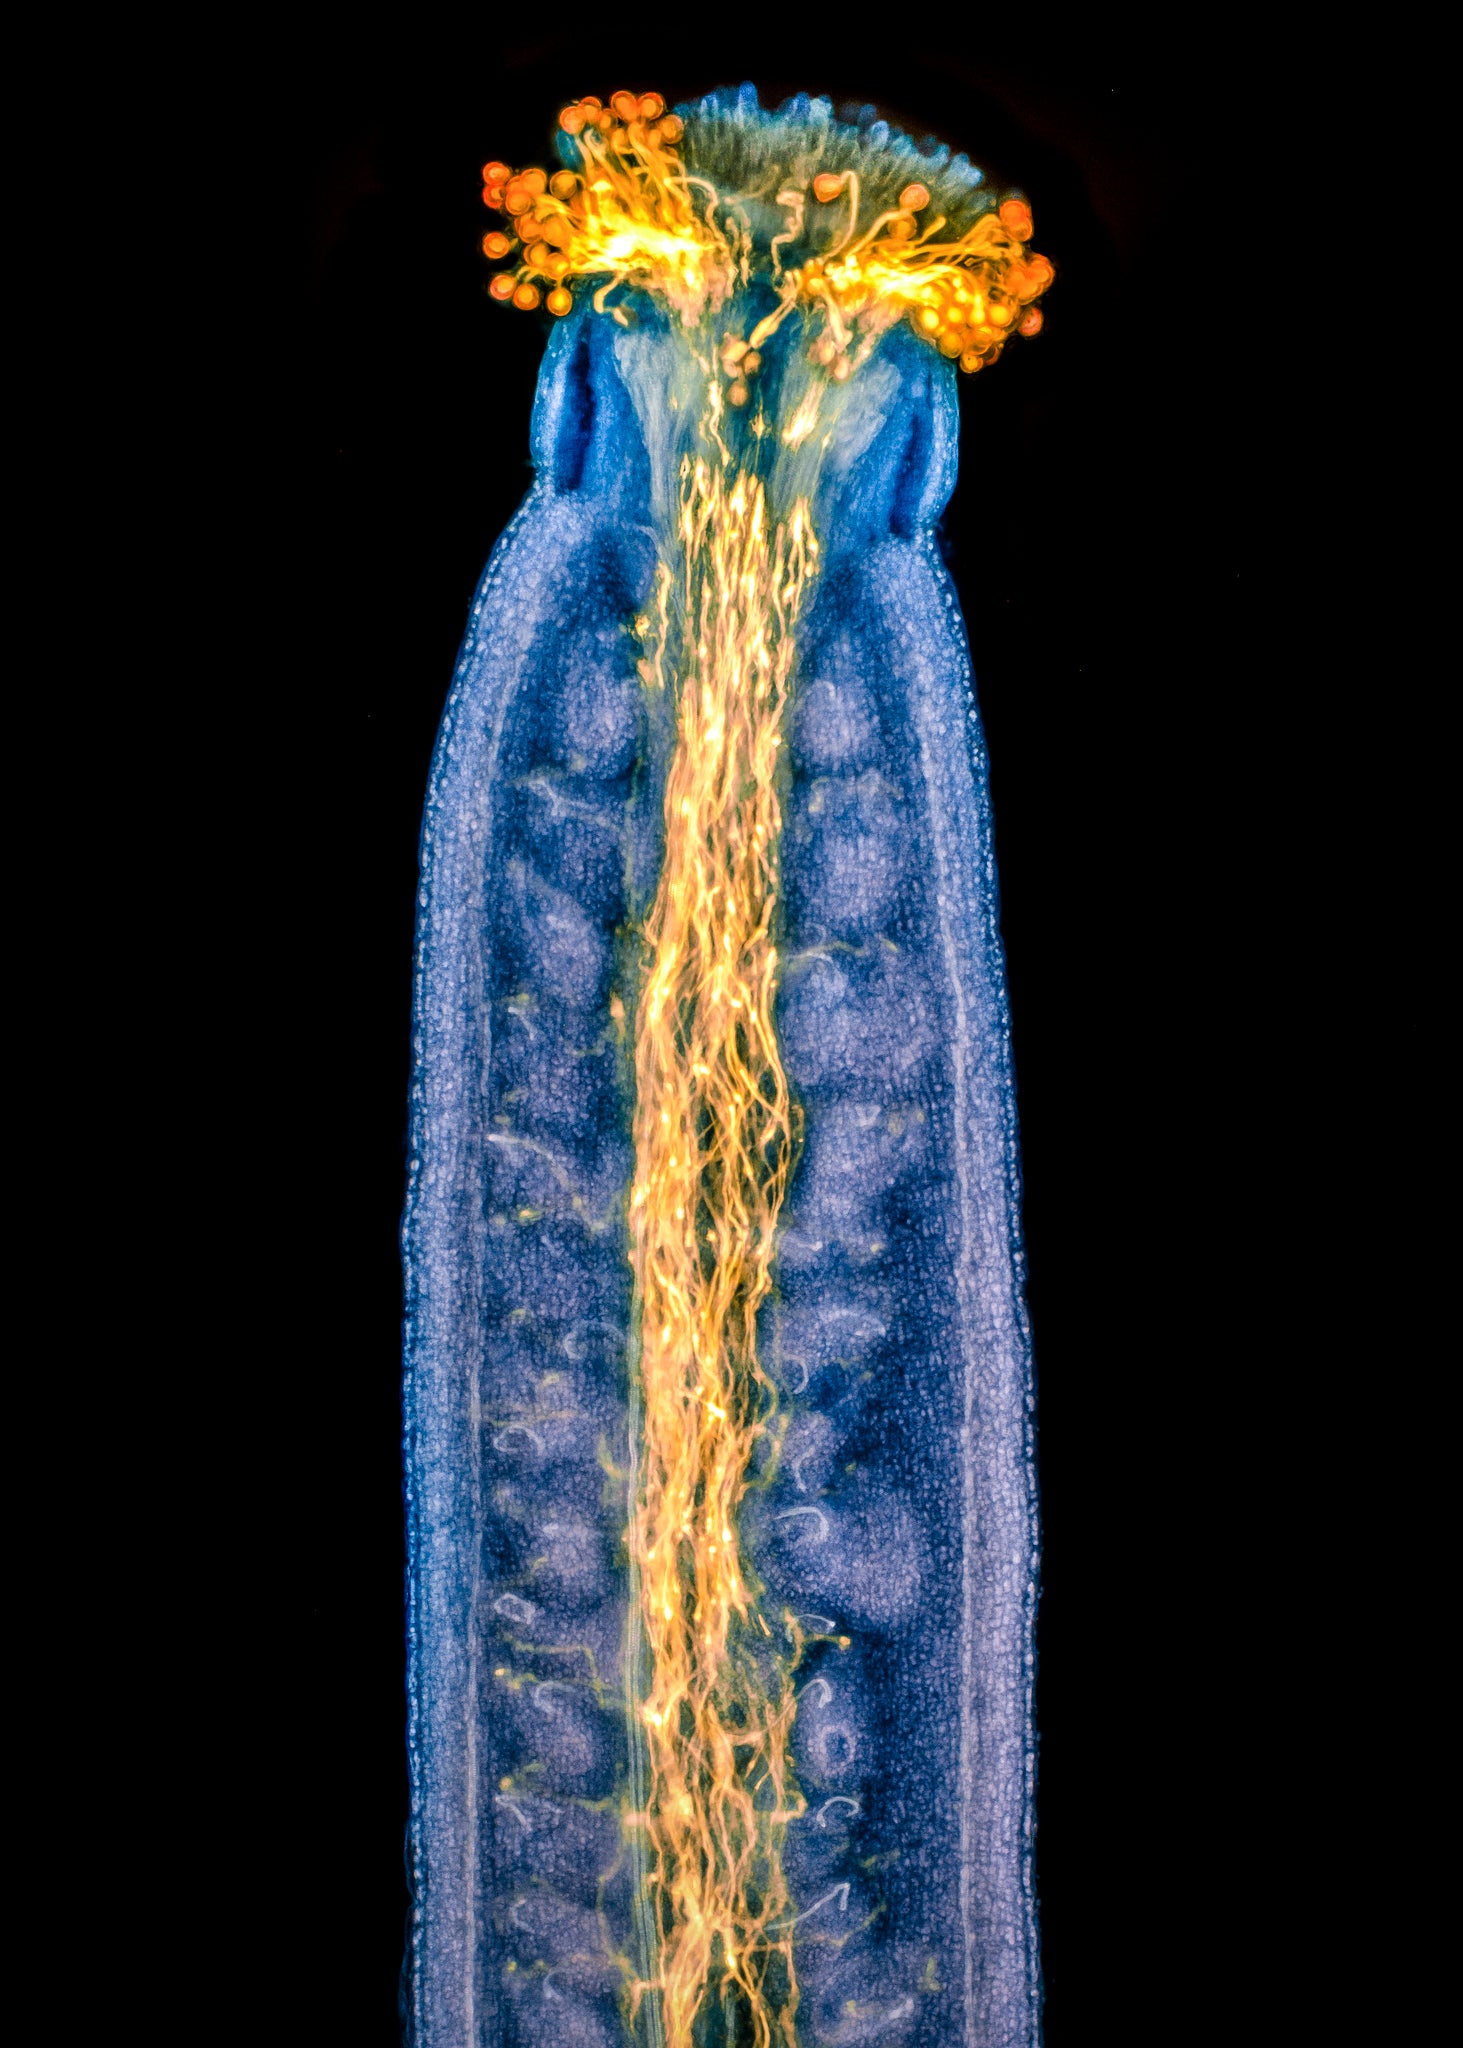 Pollen tubes in a Thale cress' pistil. (Photo: Jan Martinek)